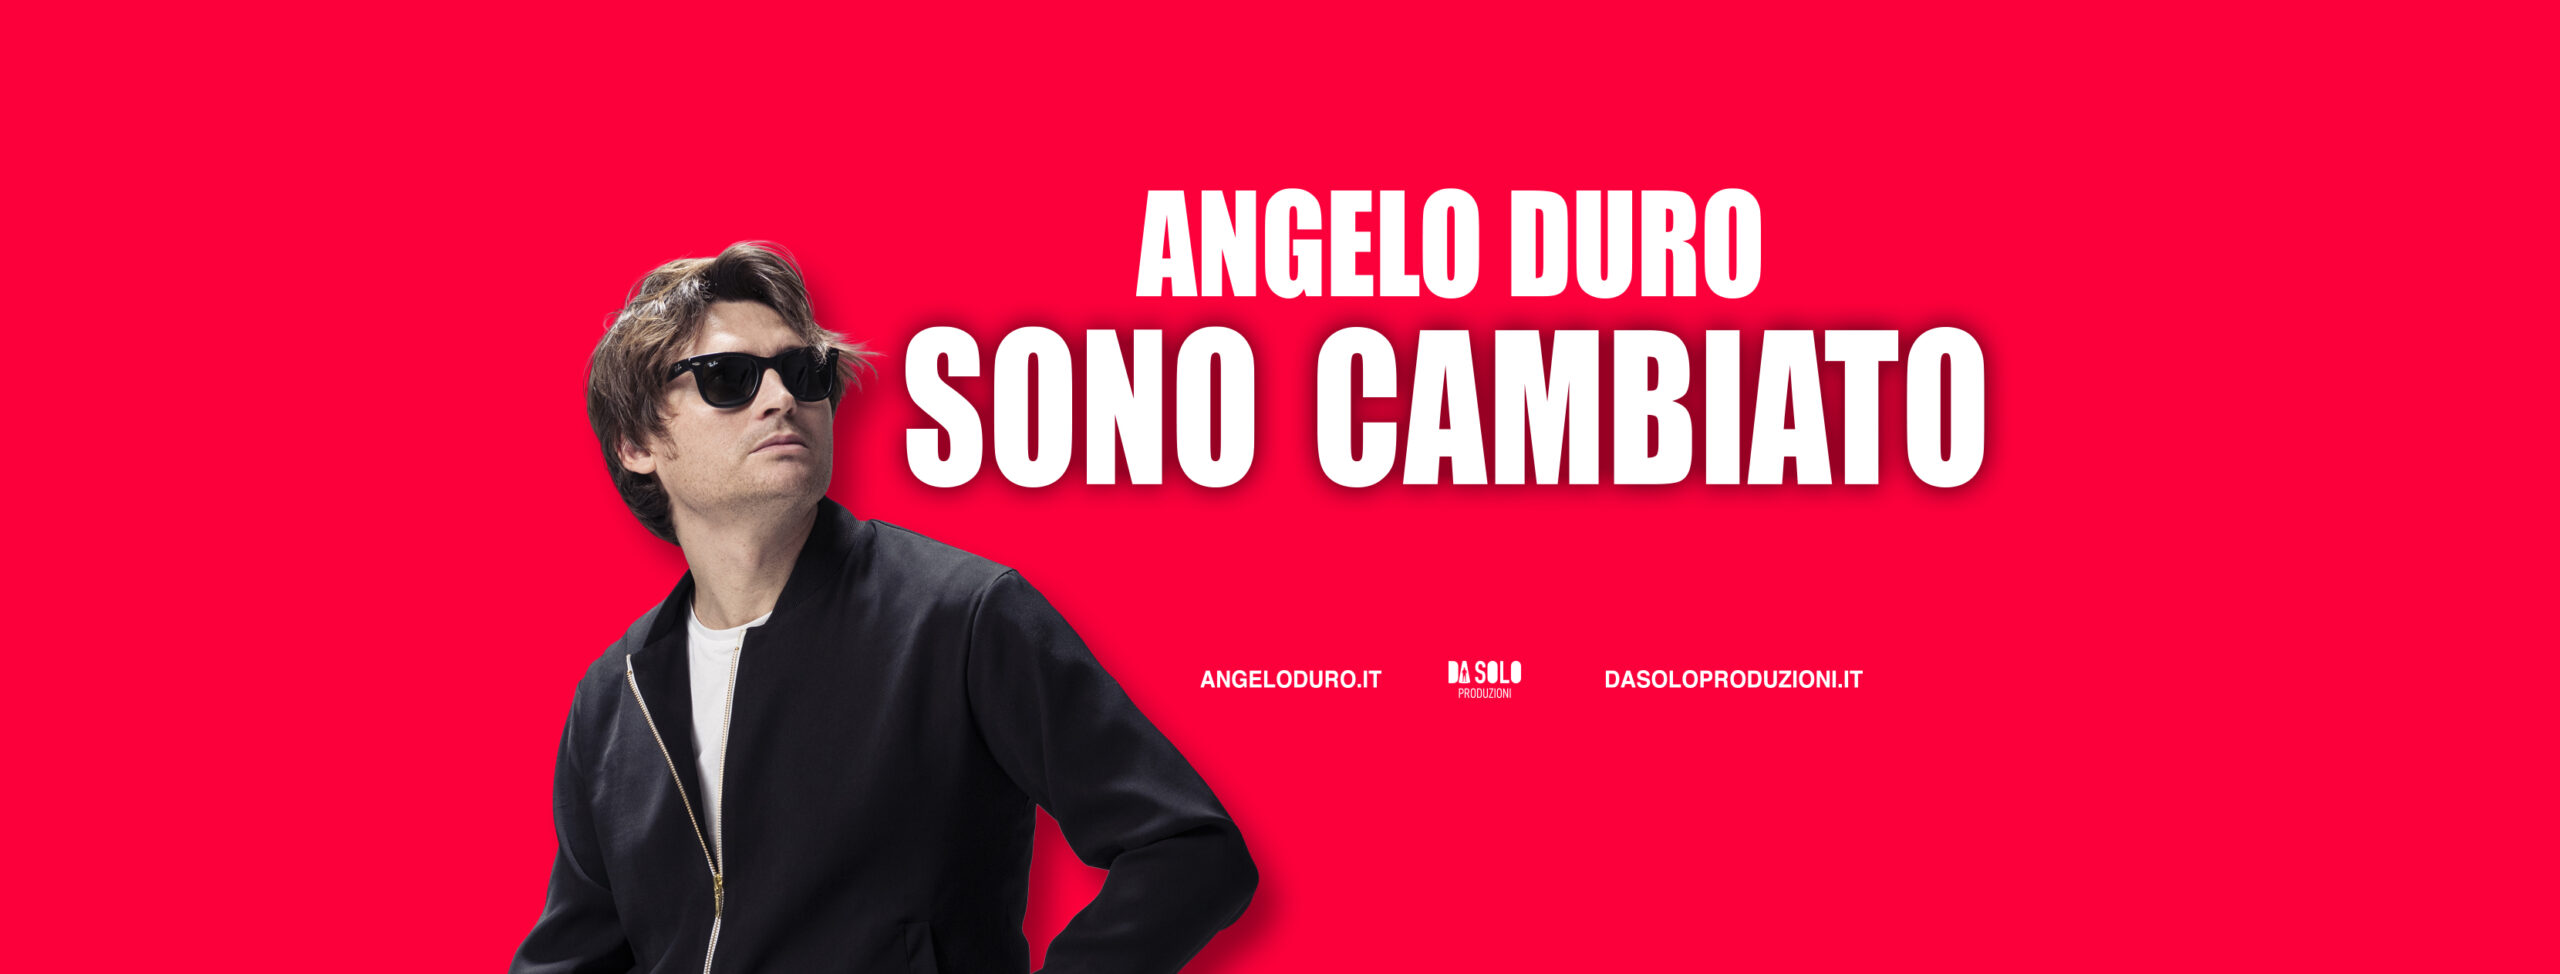 “Sono cambiato” tour: Angelo Duro a Marsala a dicembre